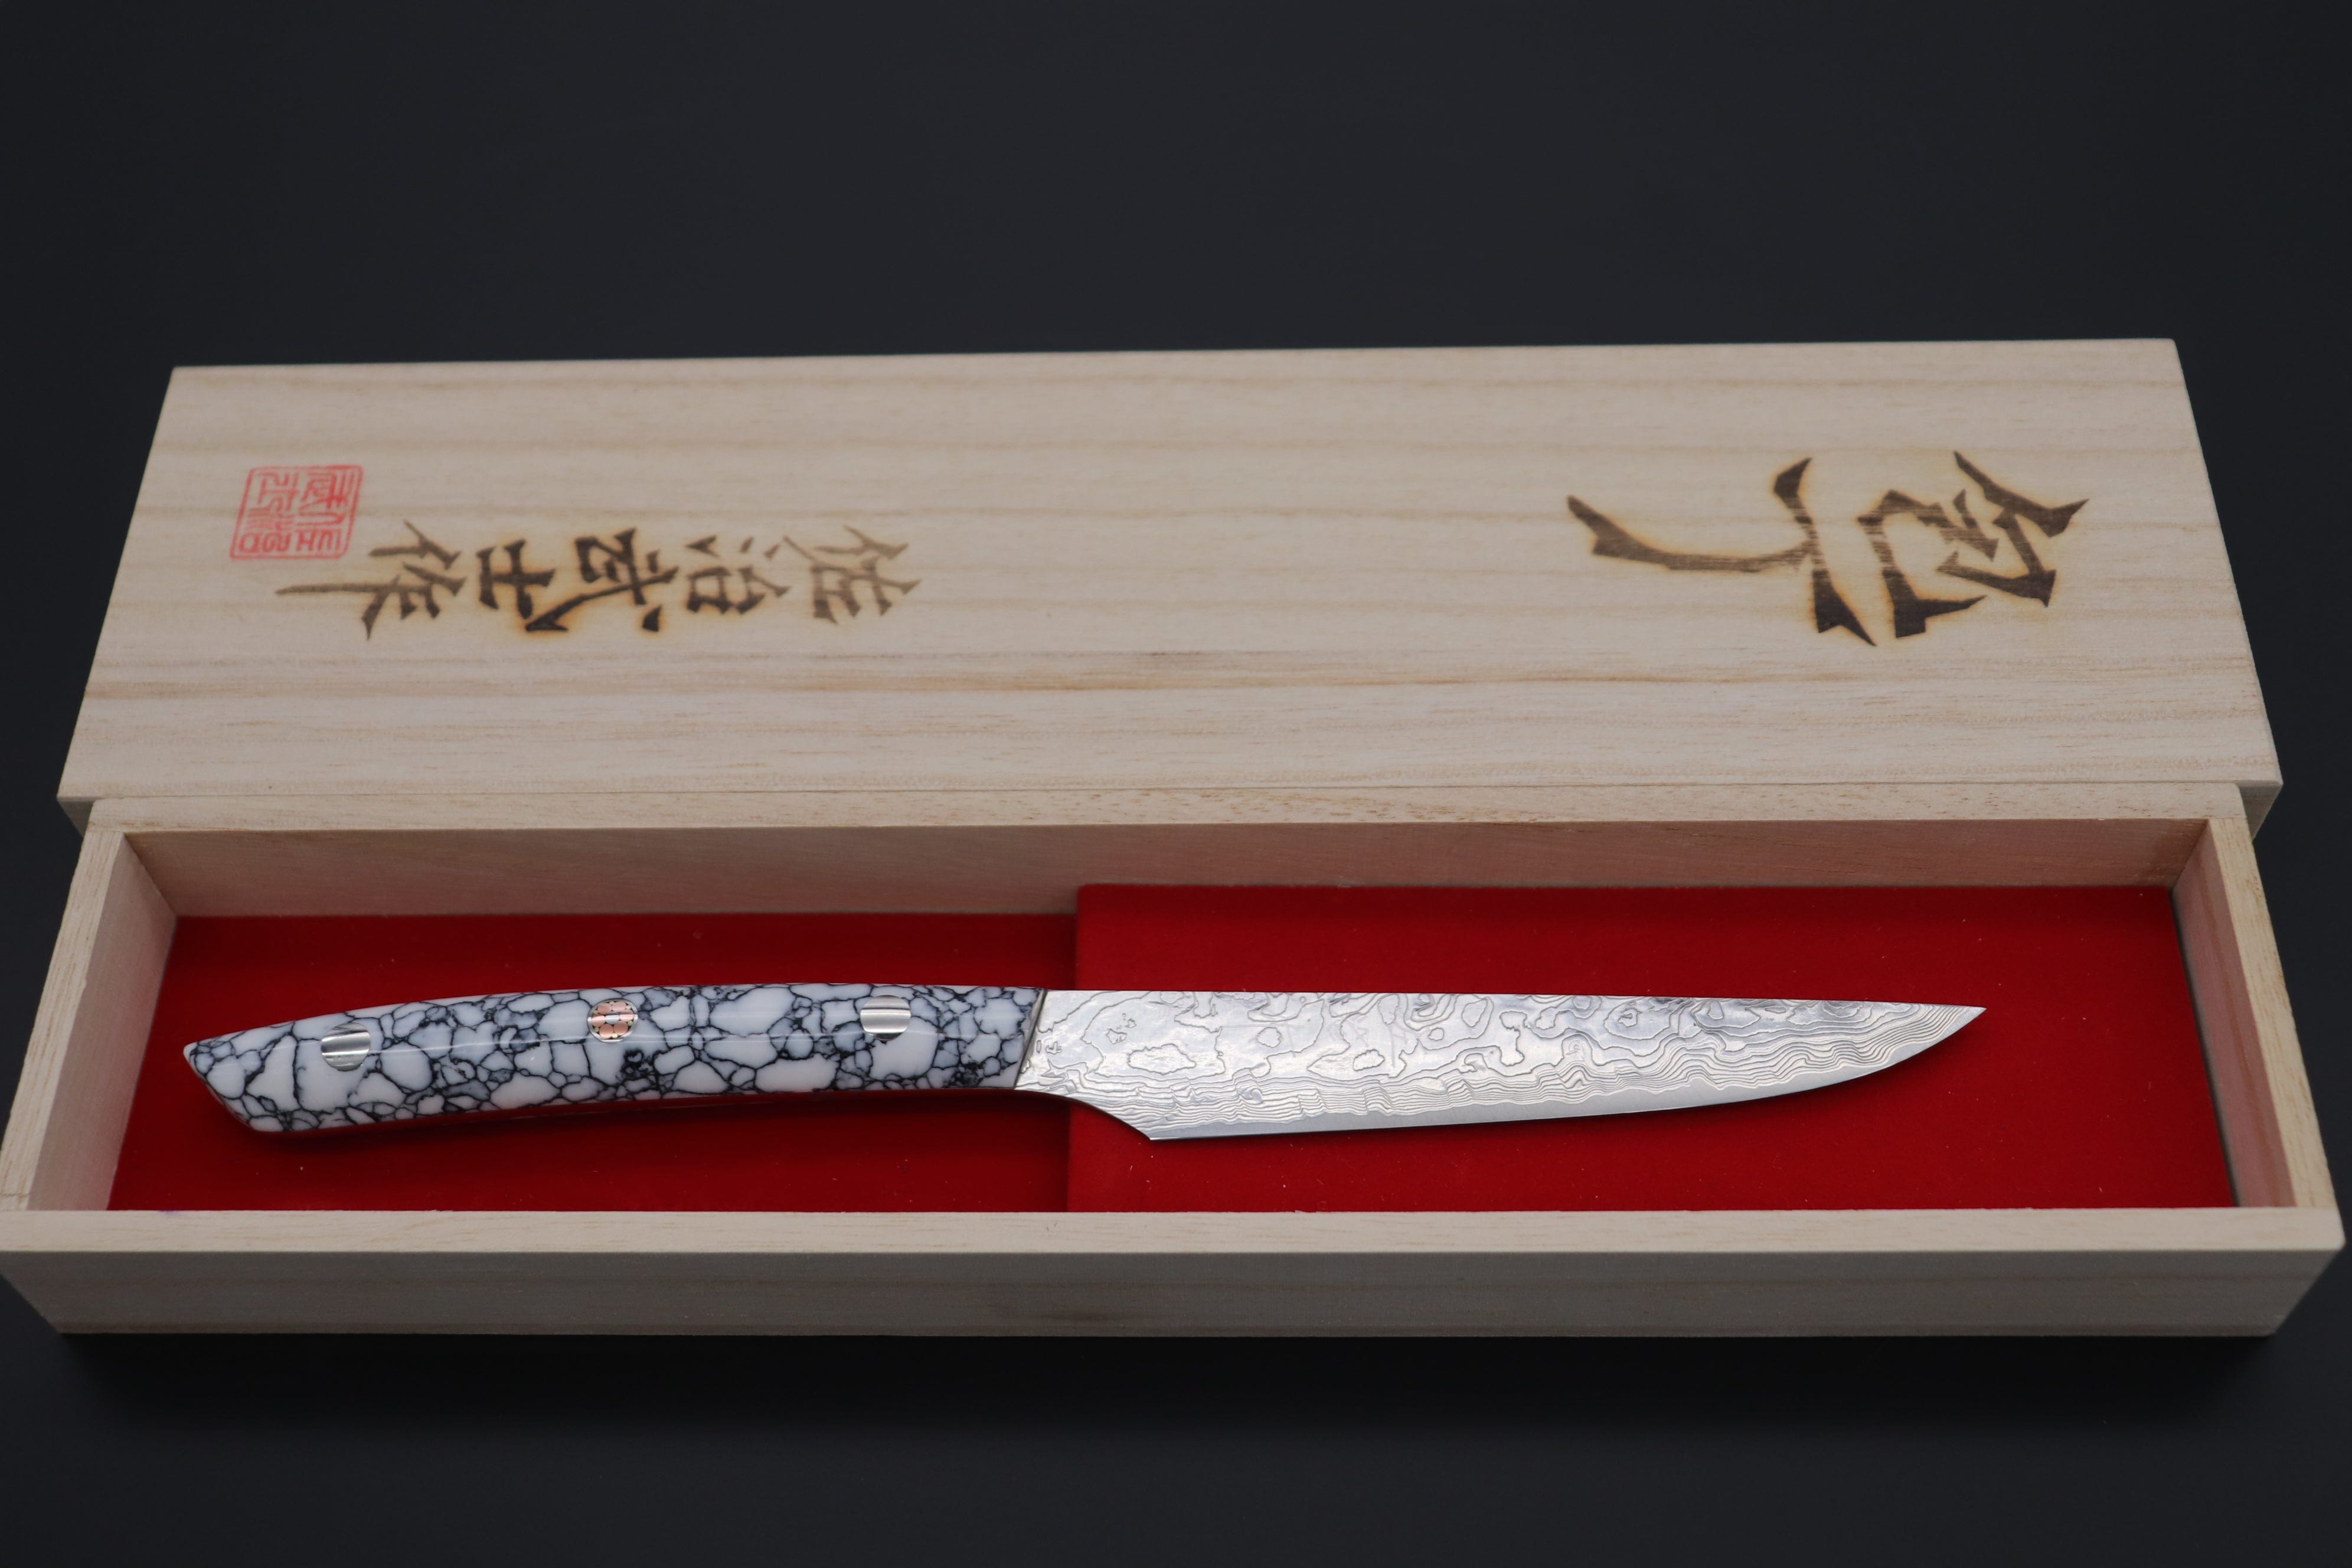 Essential Japanese Damascus Steel Steak Knife Set (Set of 8)